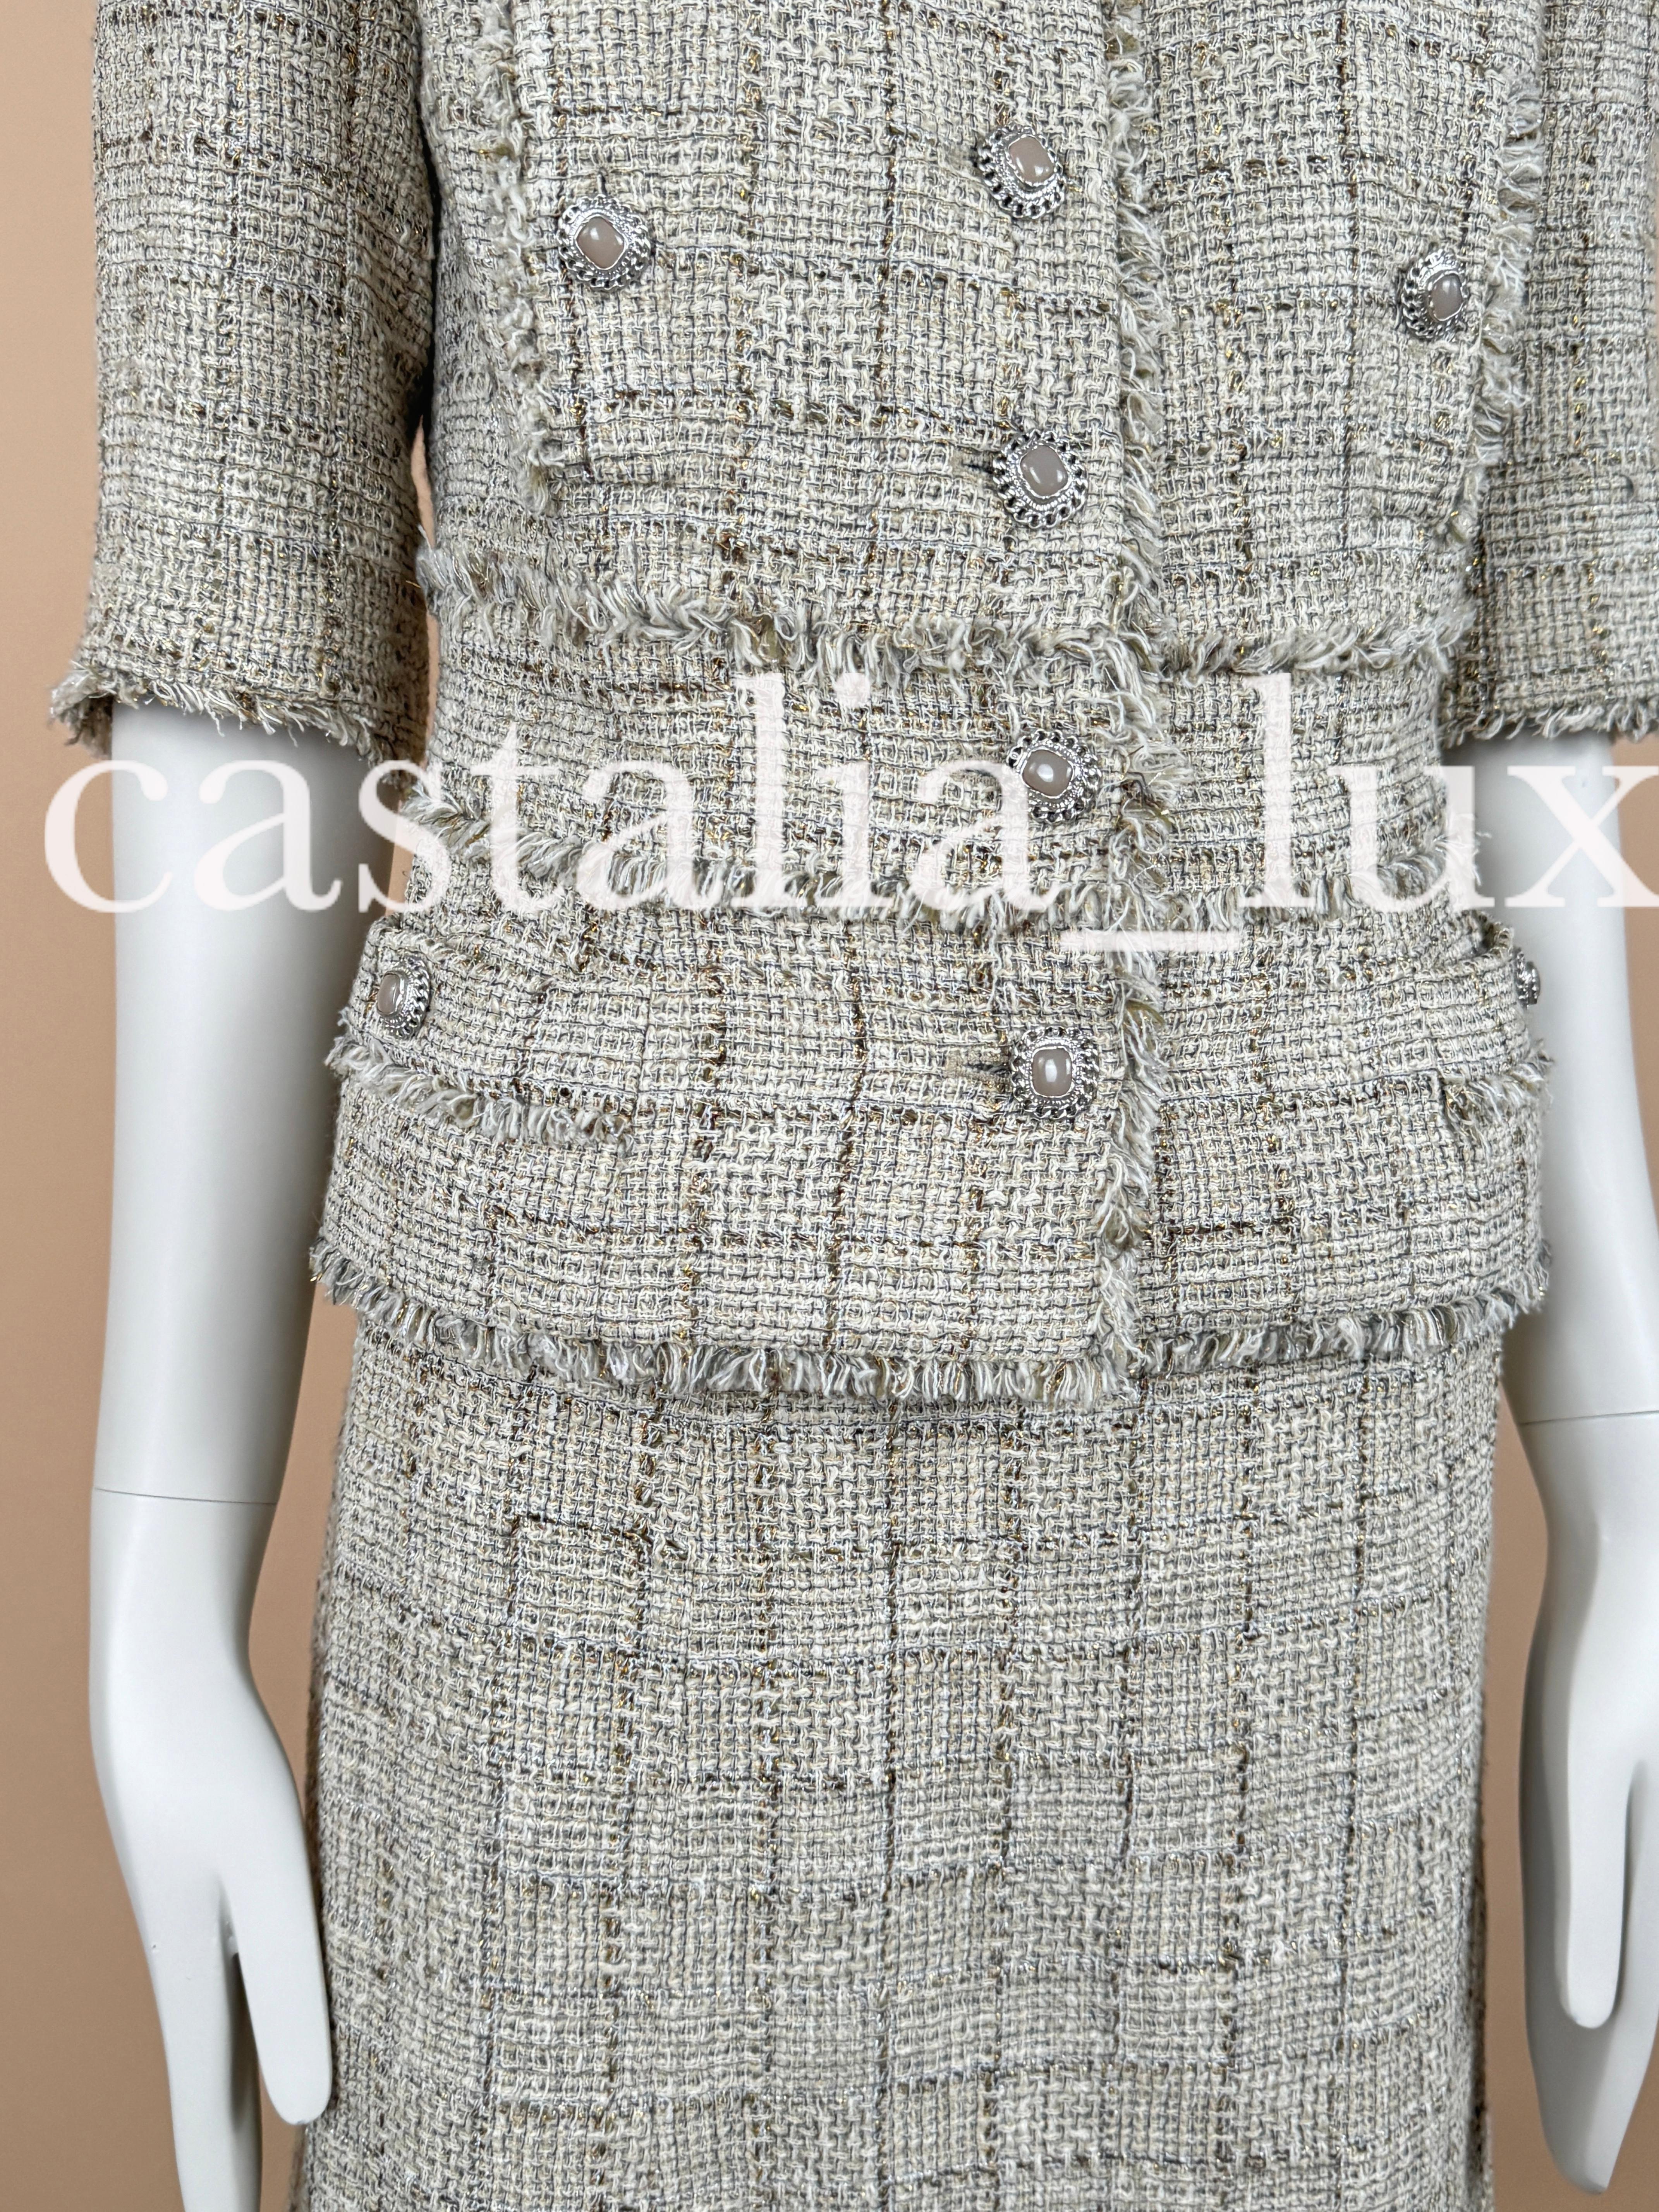 Chanel Gisele Bundchen Style Jewel Buttons Tweed Suit For Sale 11